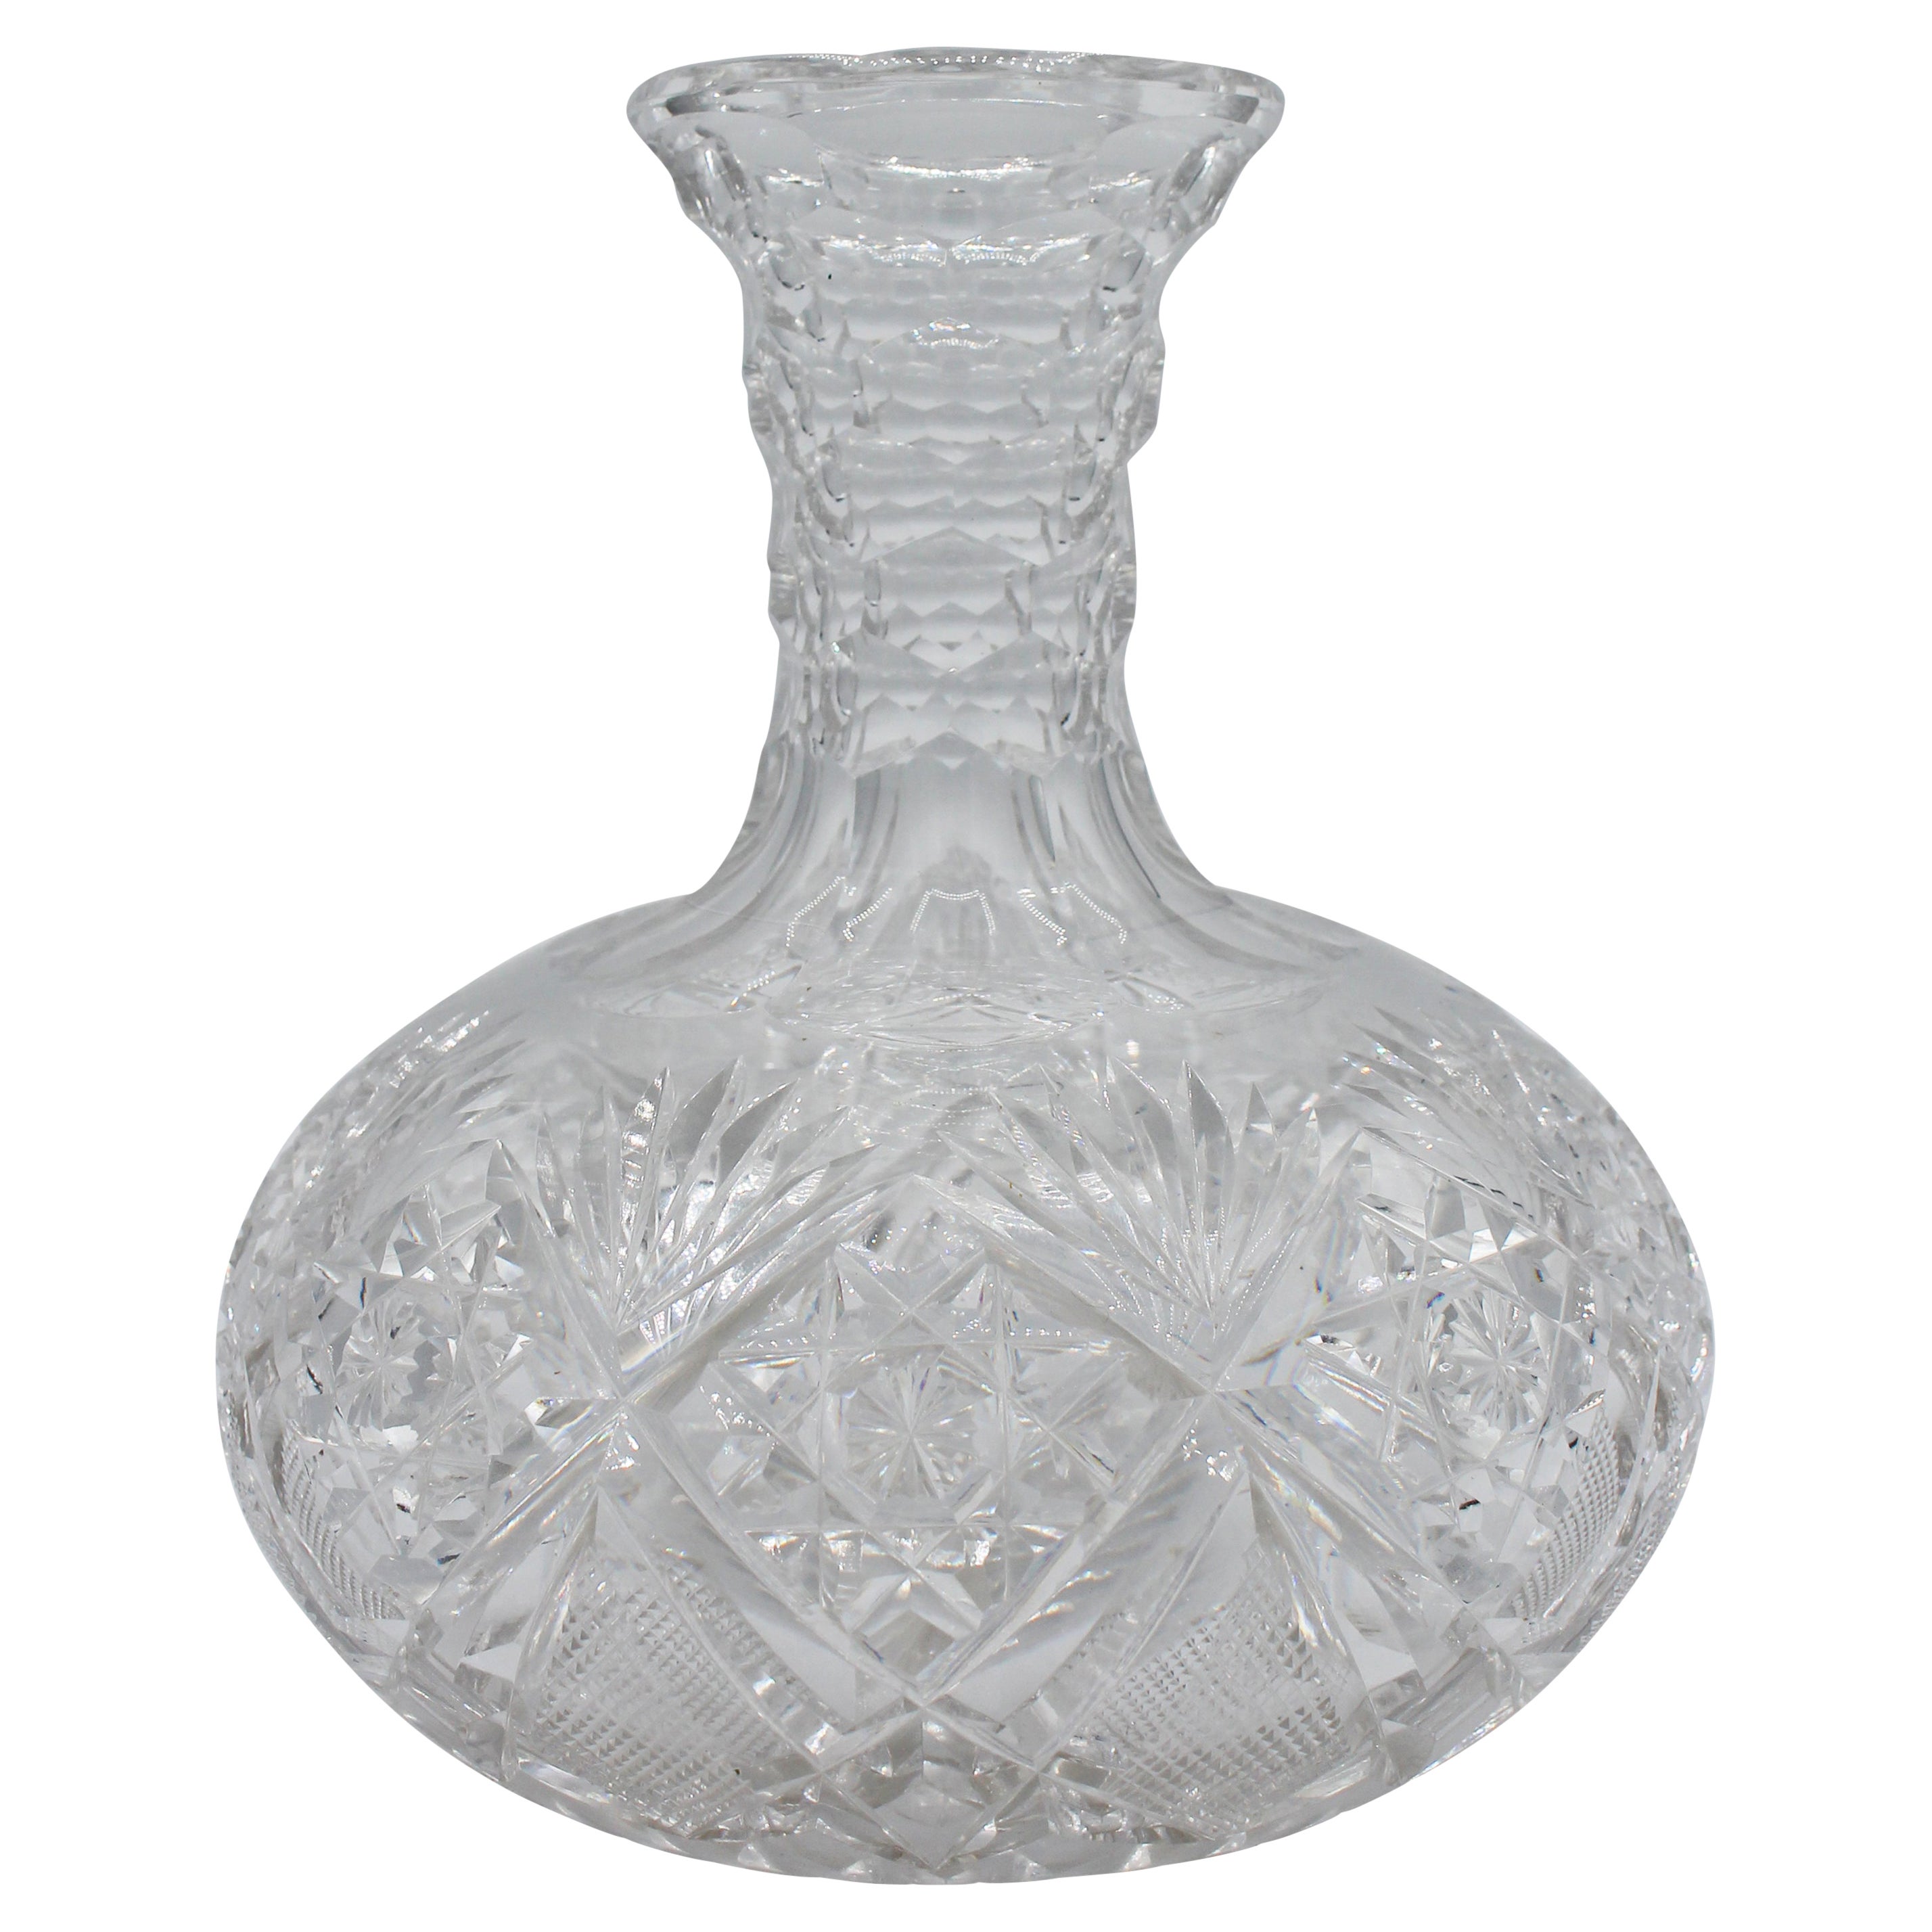 Circa 1895, American Brilliant Cut Glass Carafe